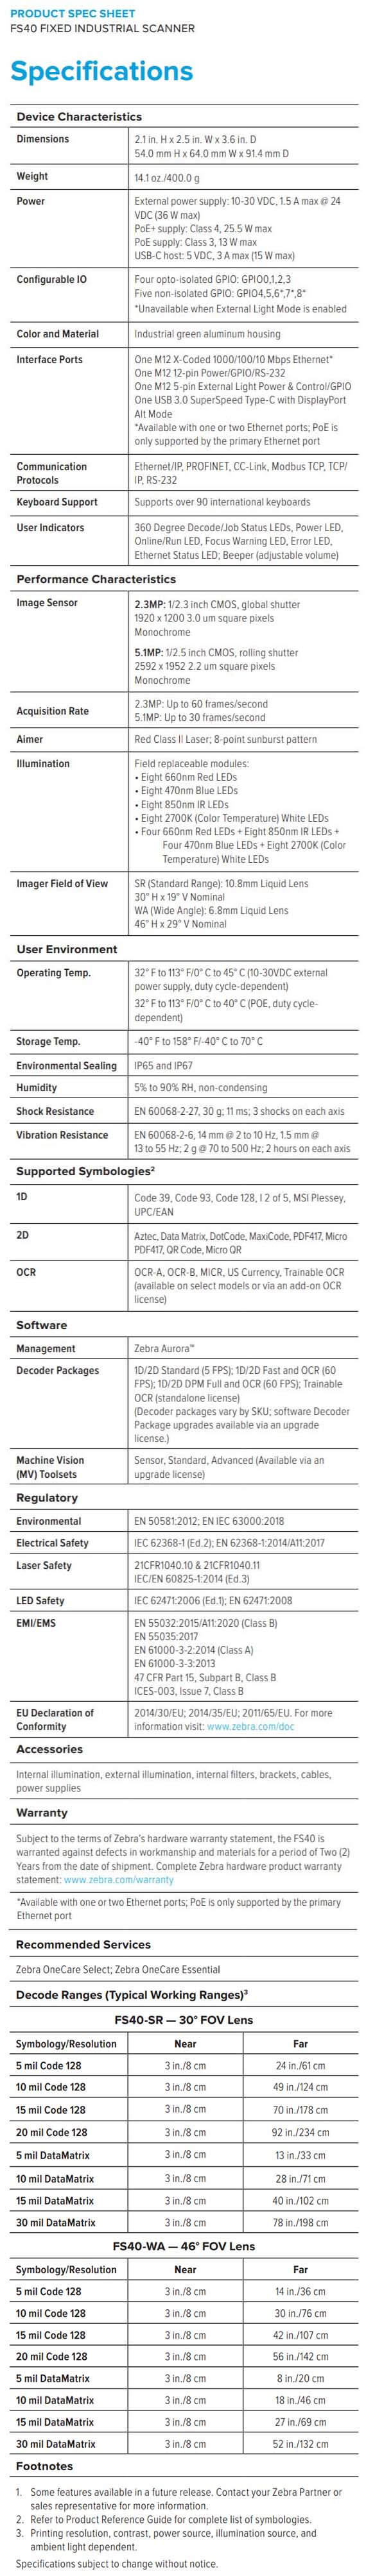 Zebra FS40 Fixed Industrial Scanner data sheet